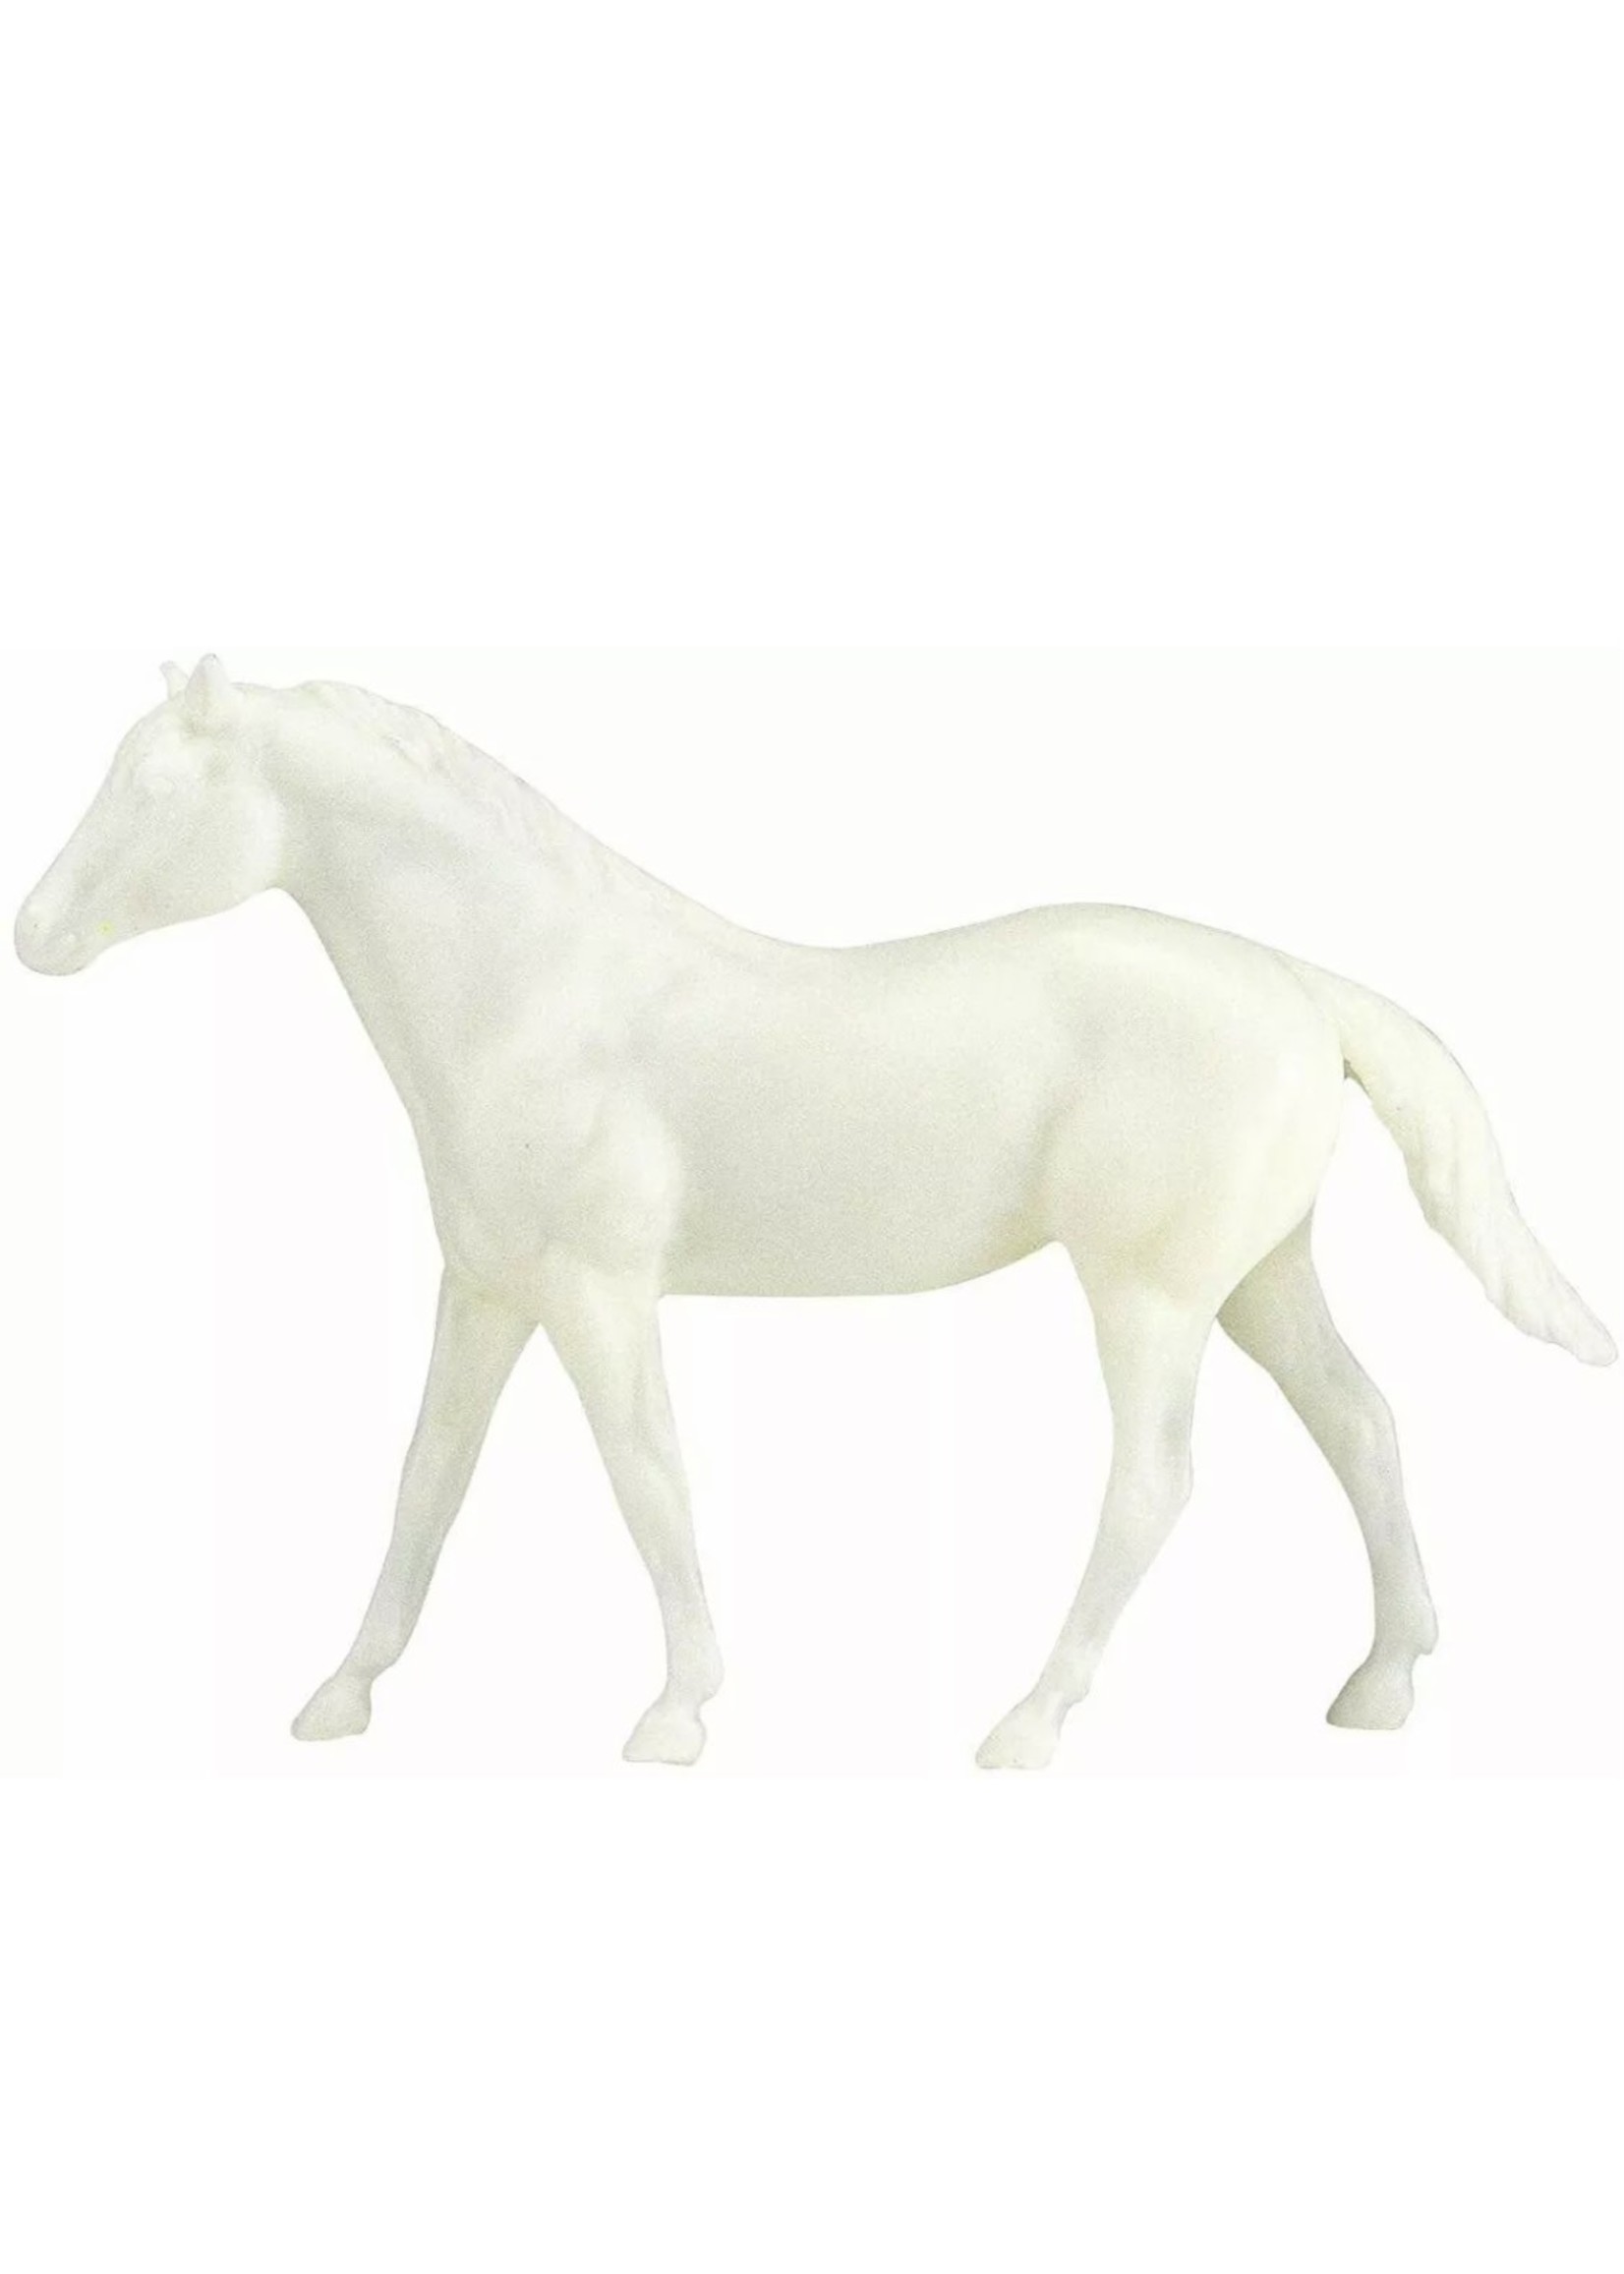 Breyer Breyer Paint Your Own Horses Qtr horse and saddlebred 4260